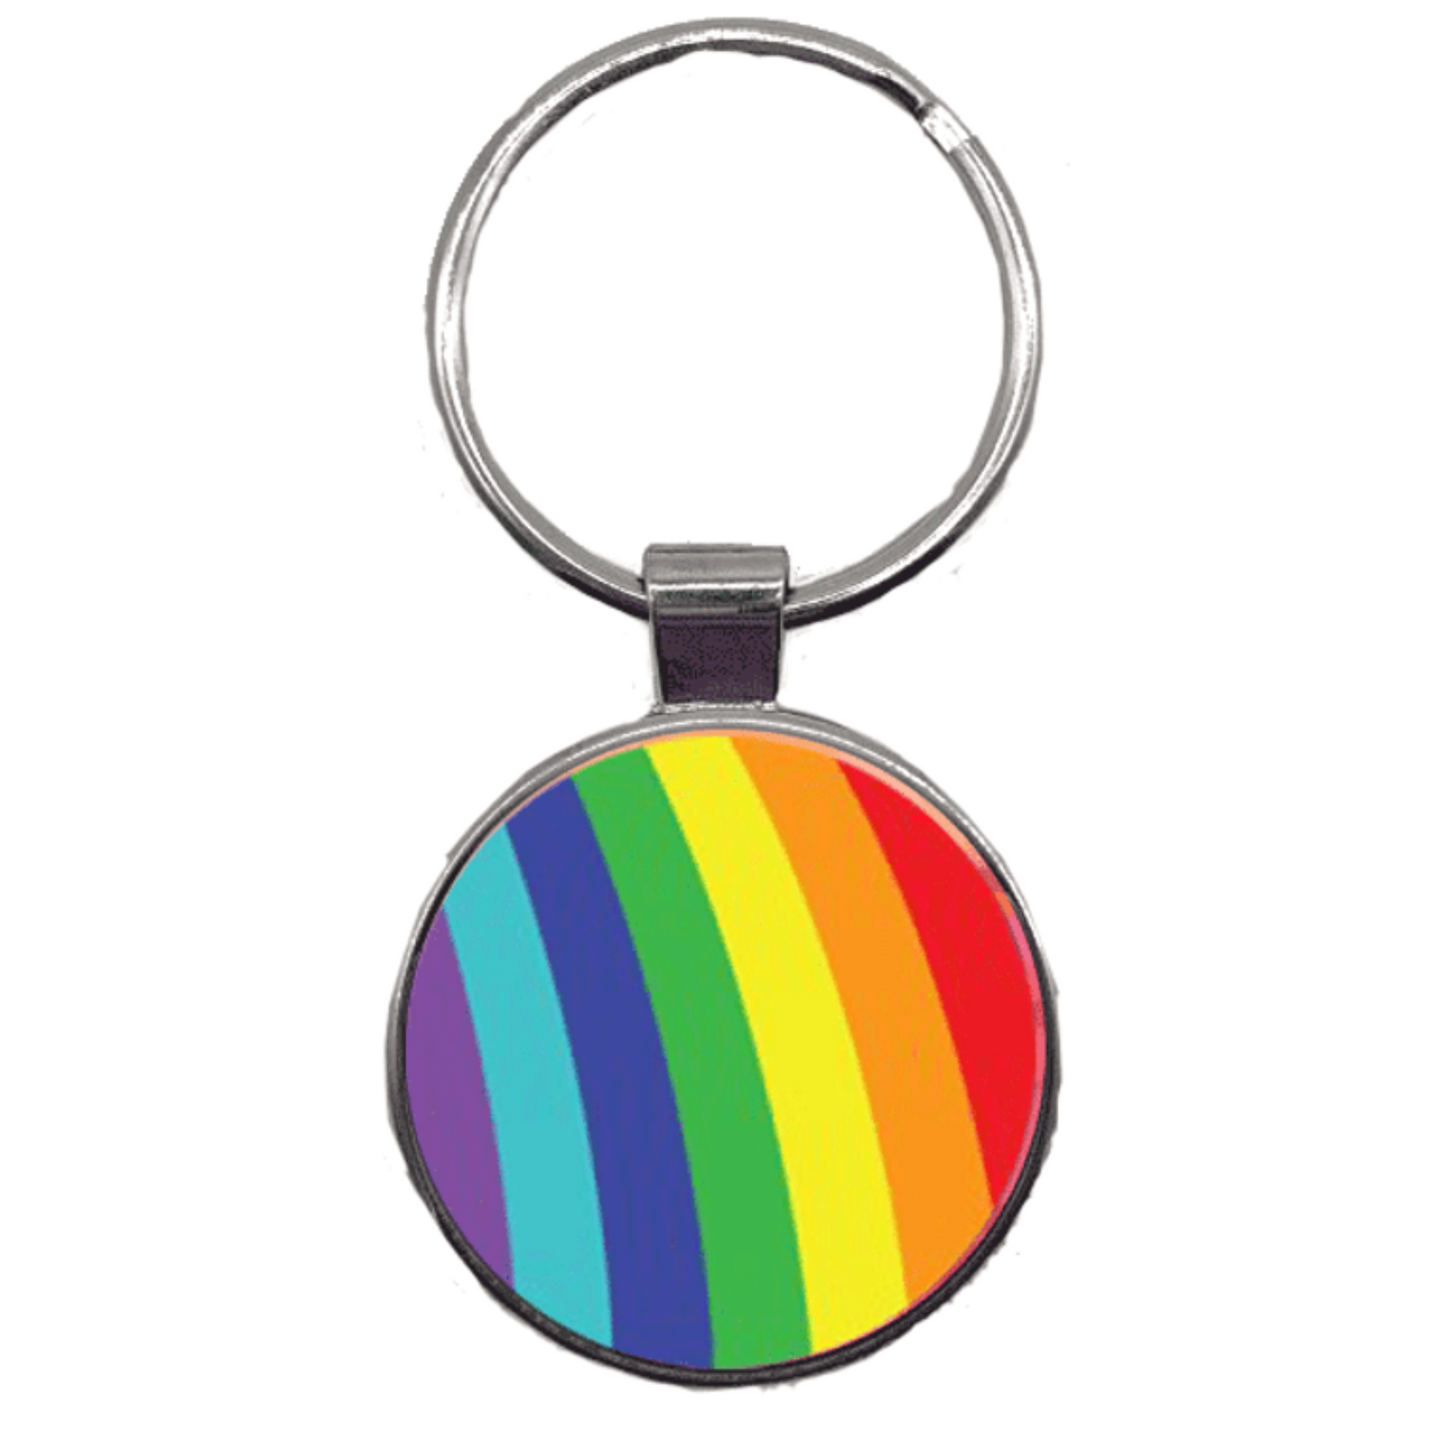 Rainbow Key Ring - Dome Style